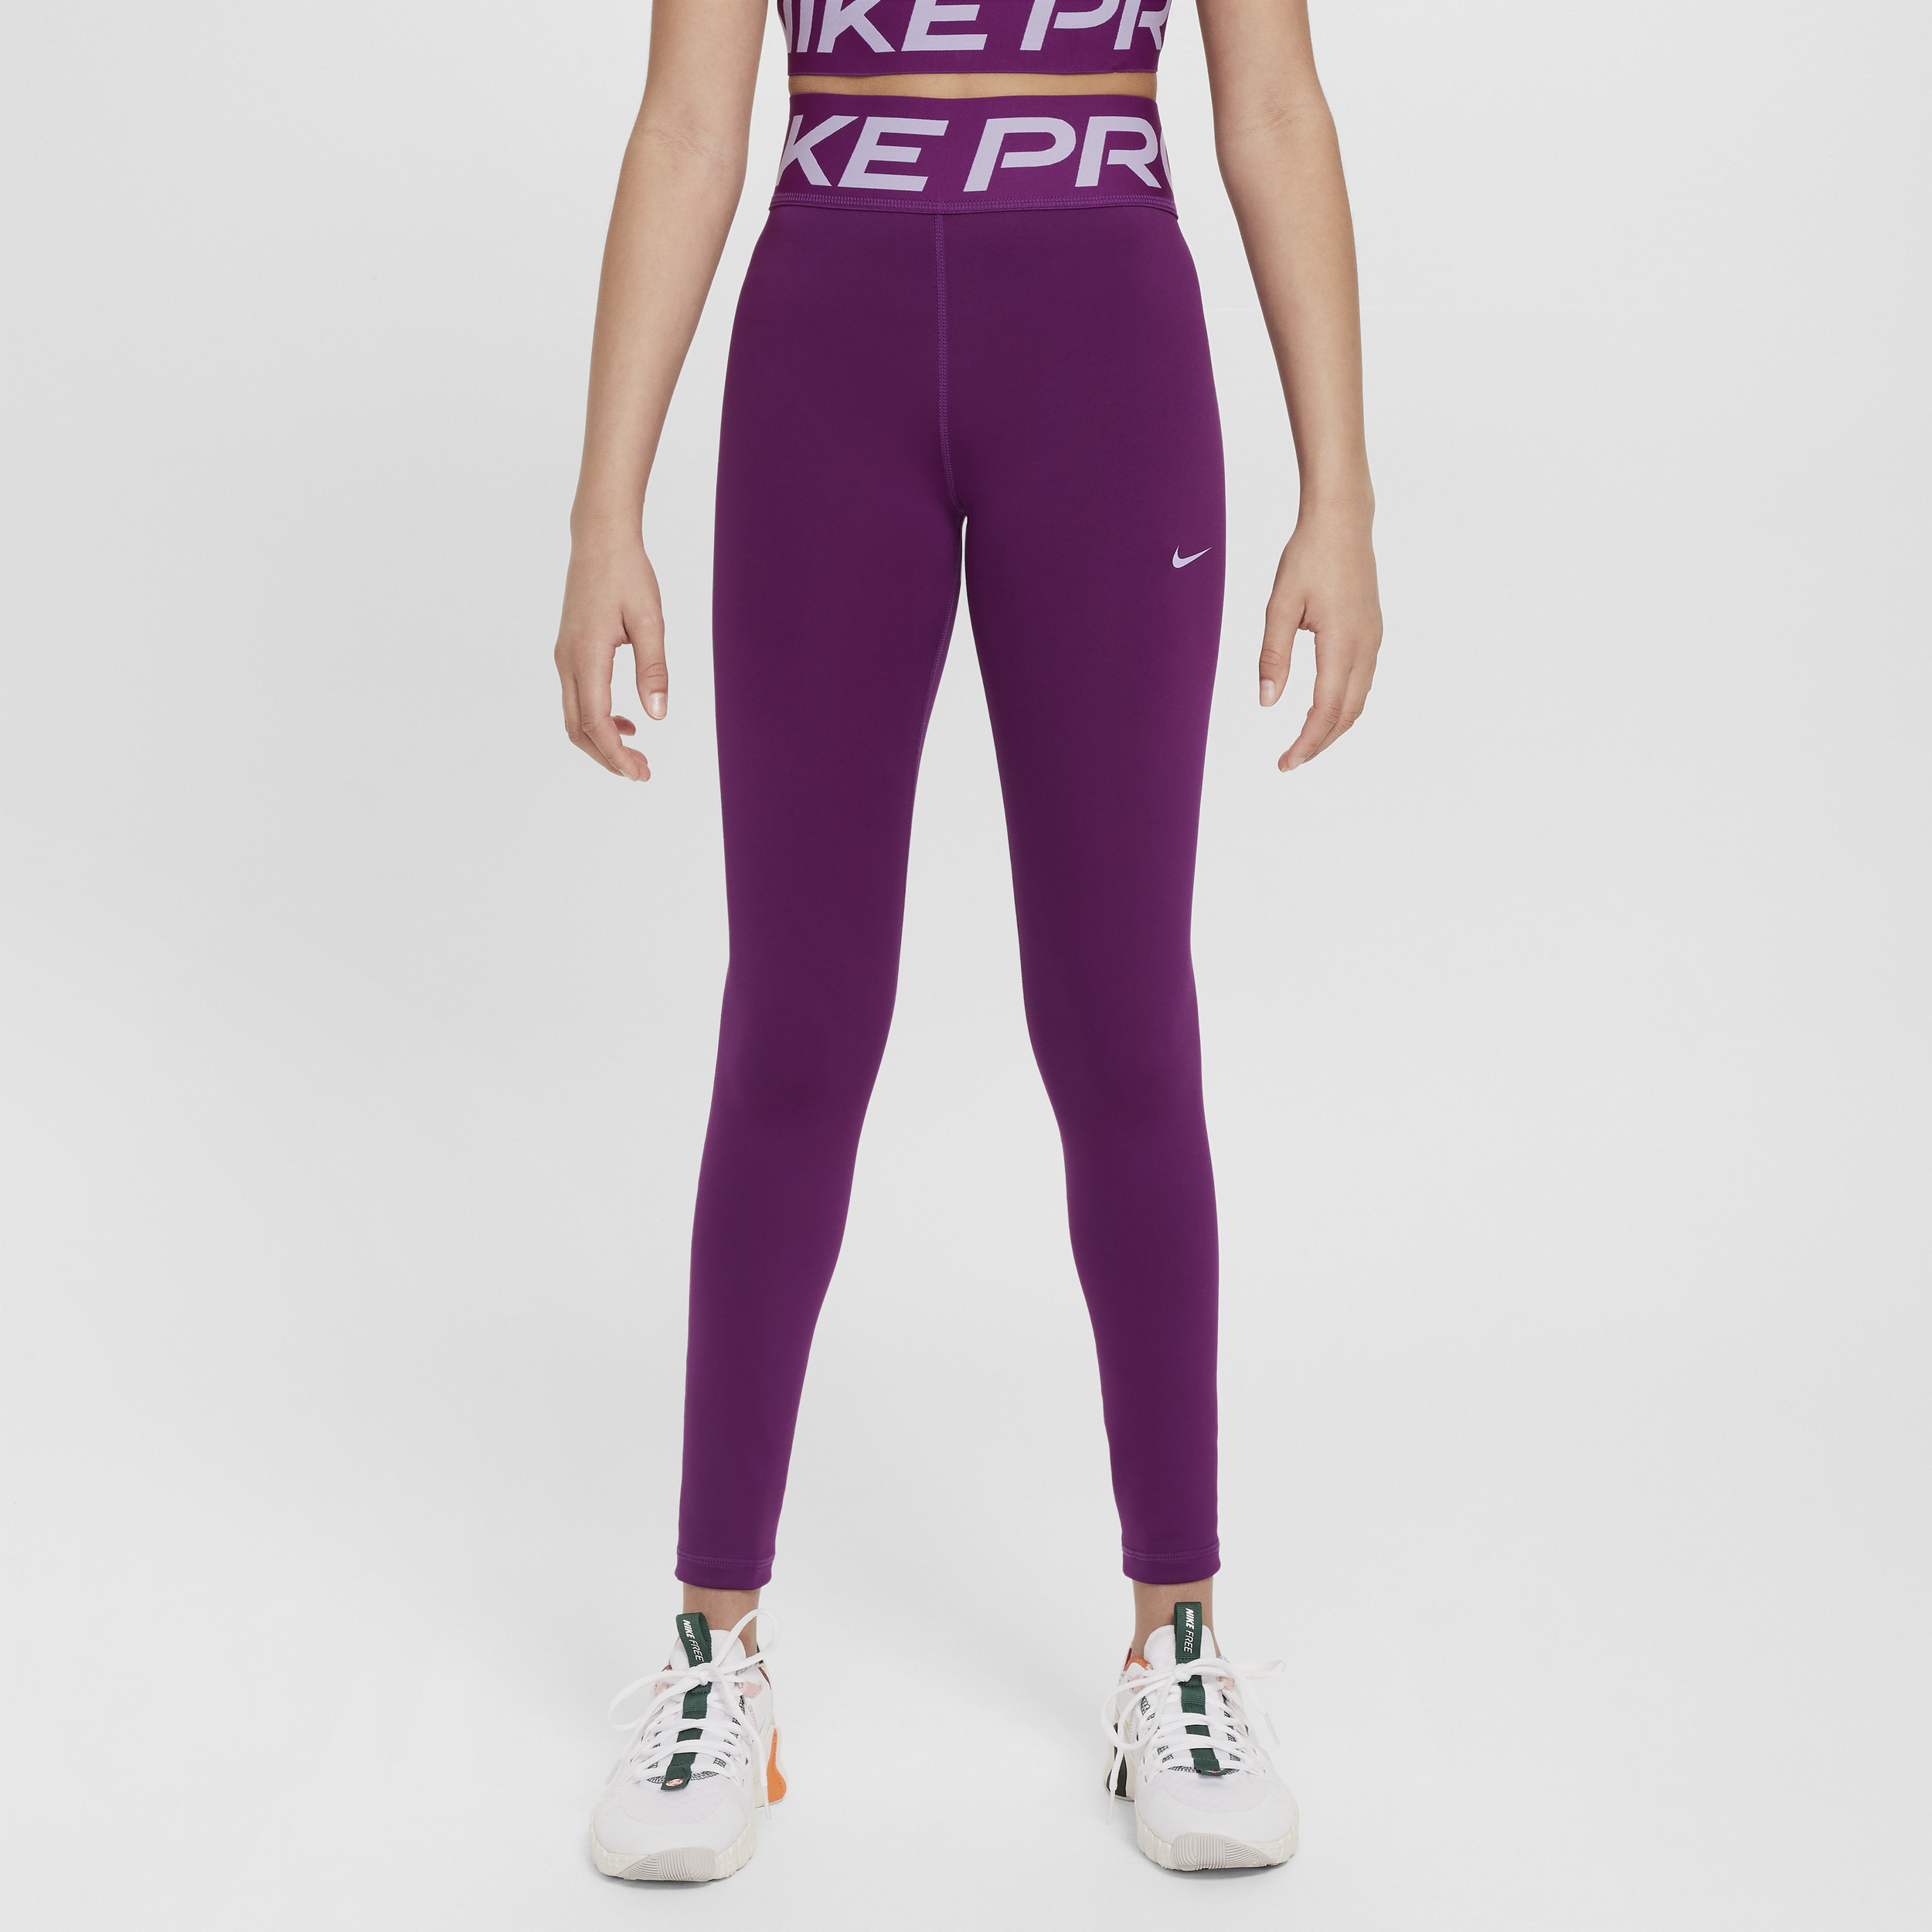 Leggings Nike Pro Dri-FIT – Bambina/Ragazza - Viola